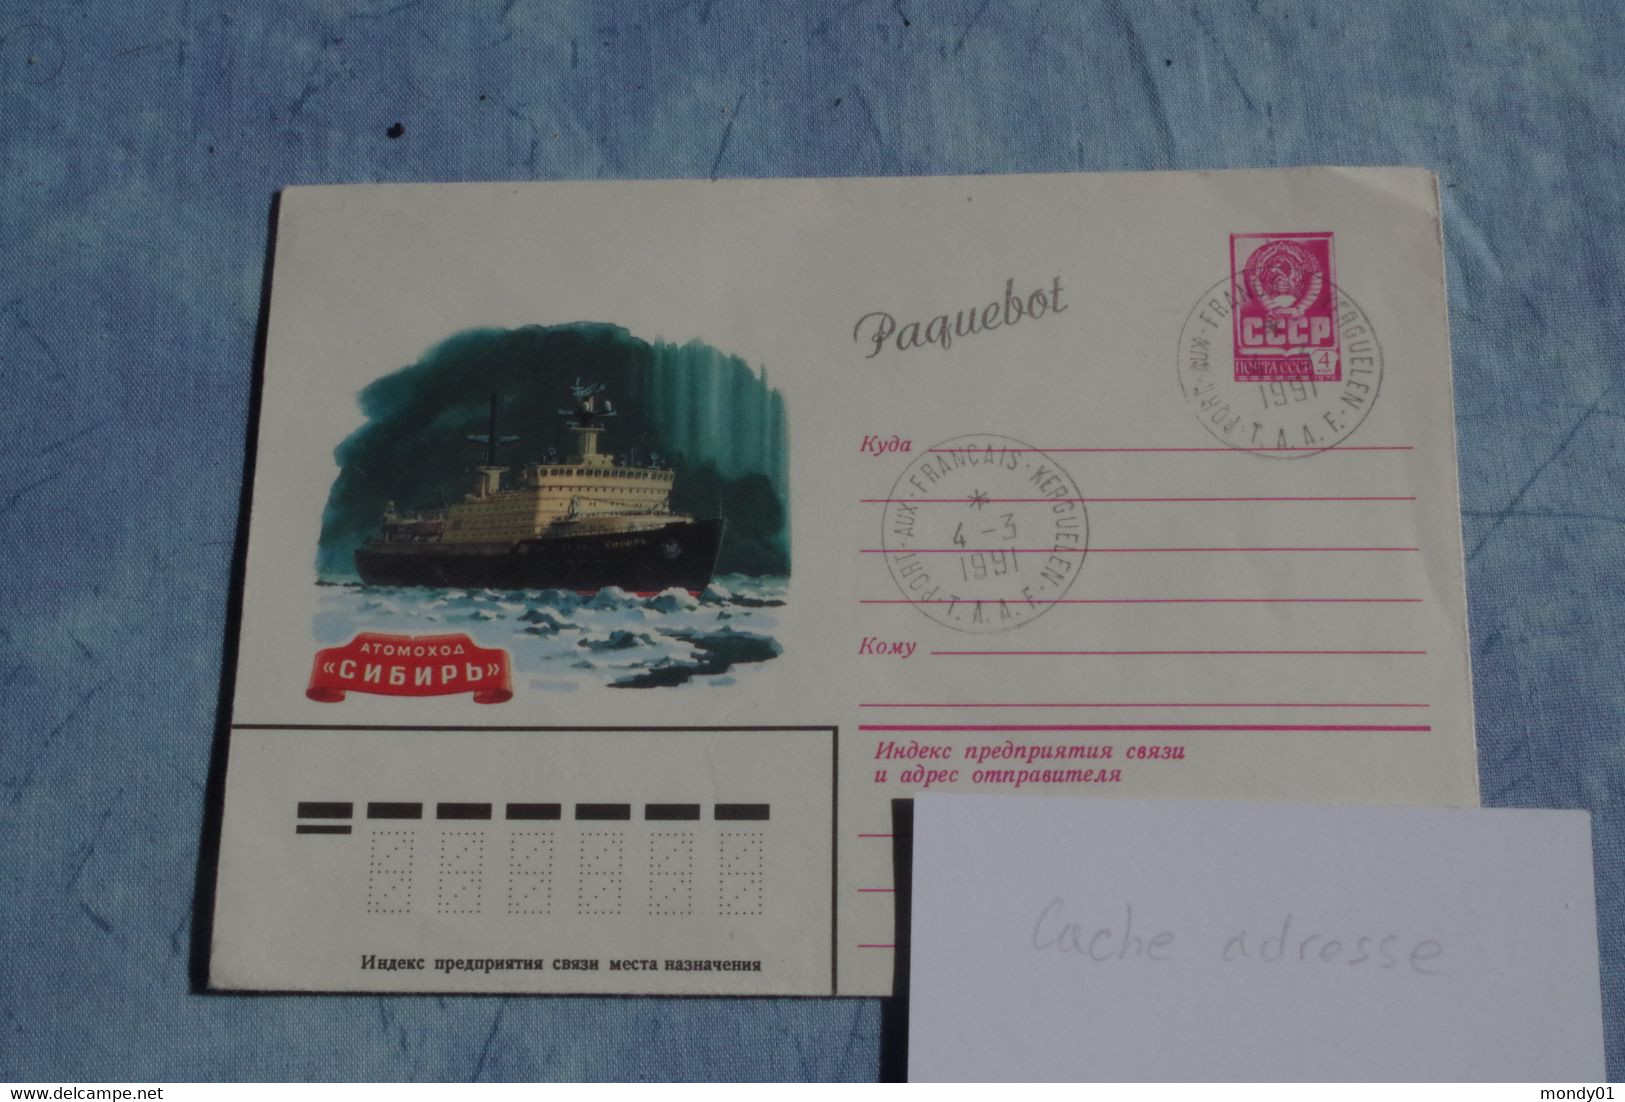 5-776  Paquebot Kerguelen 4 Mars 1991  Entier Poste URSS Navire Atomic TAAF FAAT Atome énergie Nucléaire - Polar Exploradores Y Celebridades